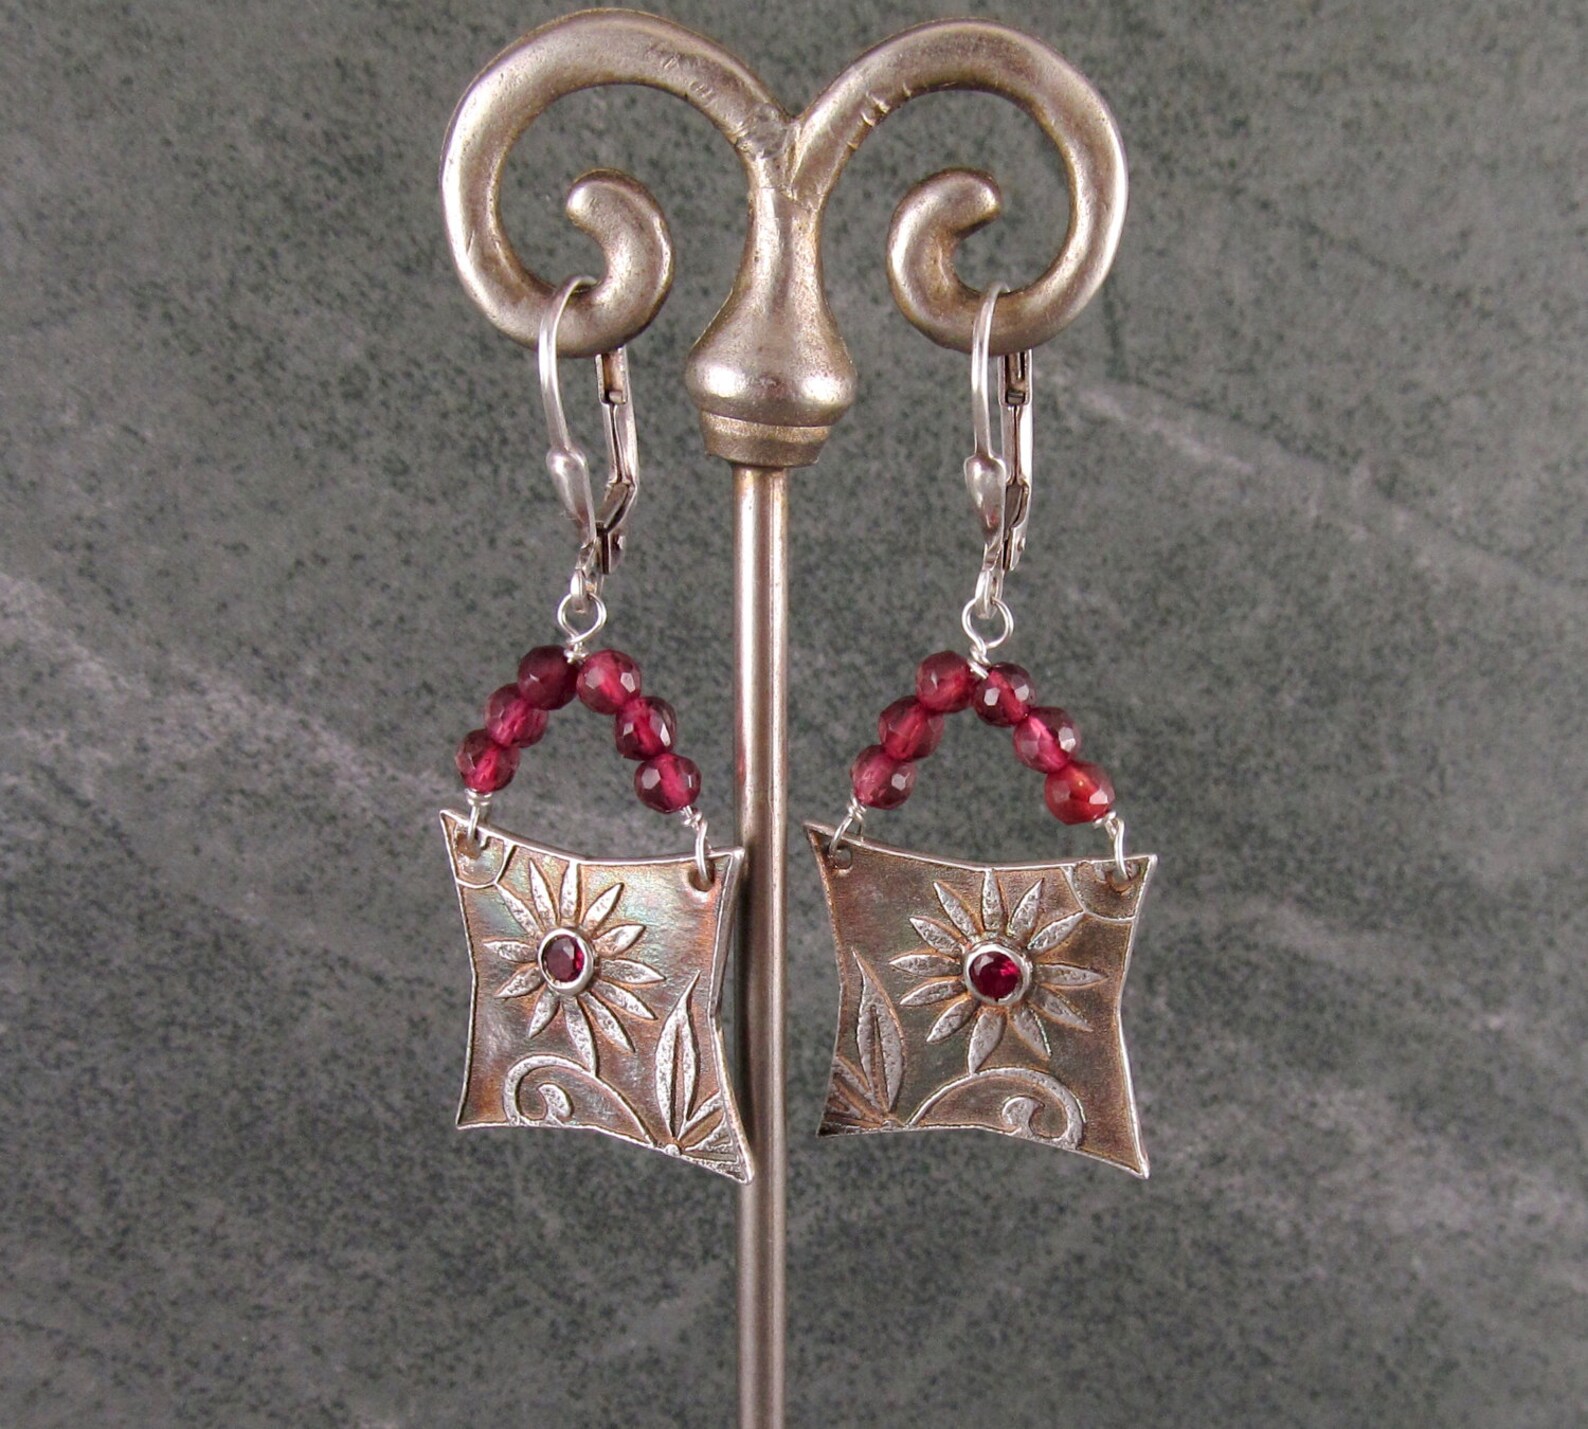 Garnet purse earrings handmade recycled fine silver floral | Etsy